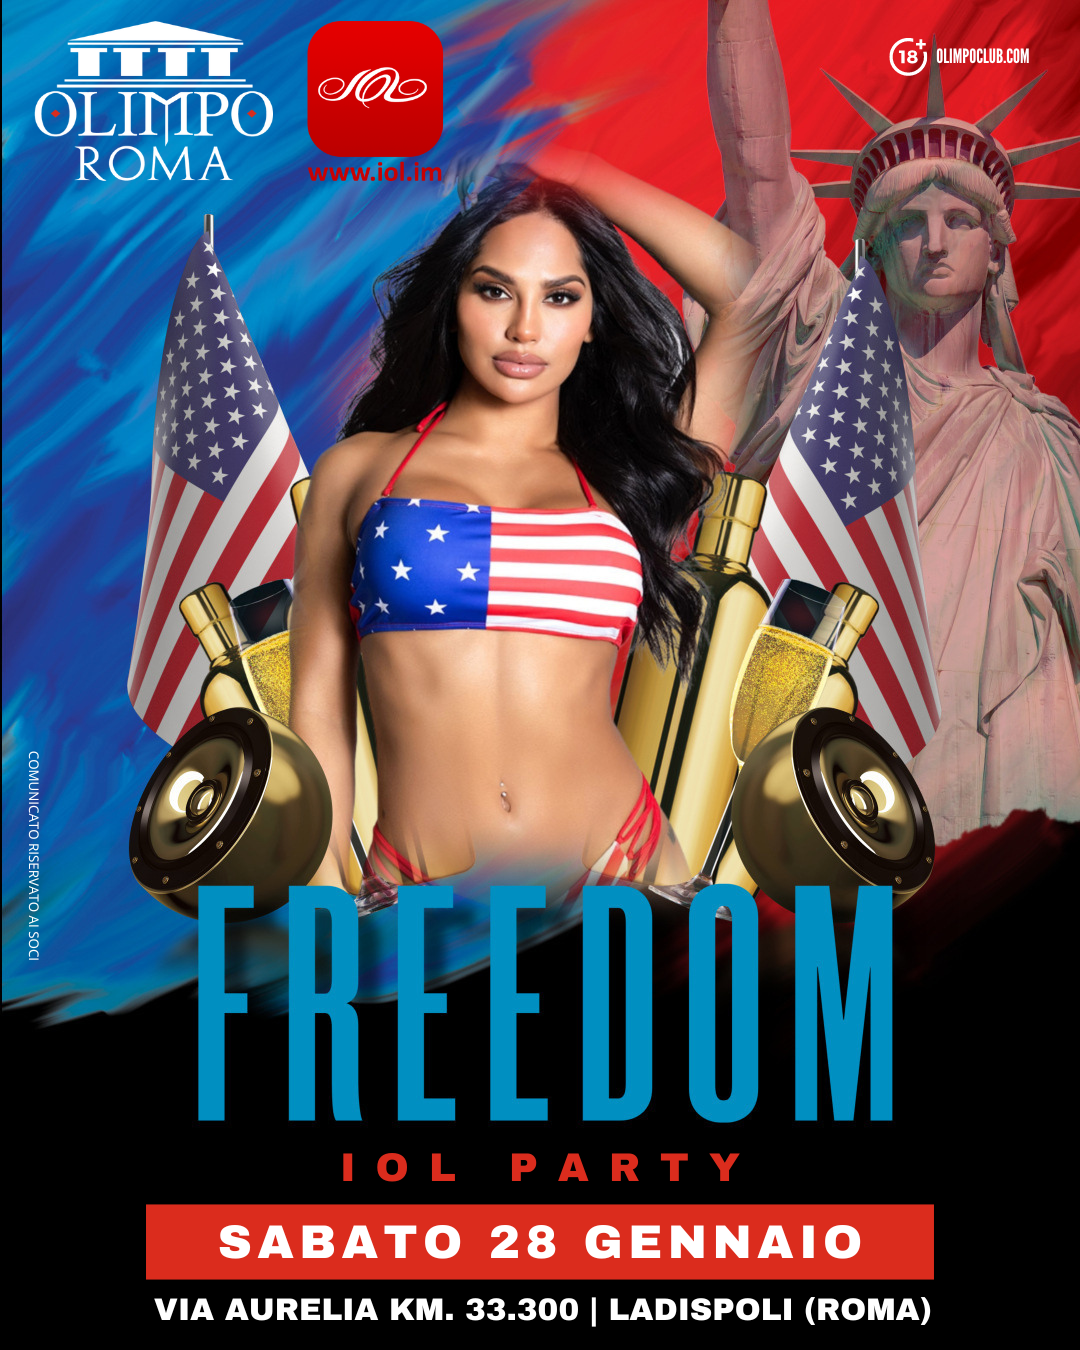 freedom iol party olimpo club roma